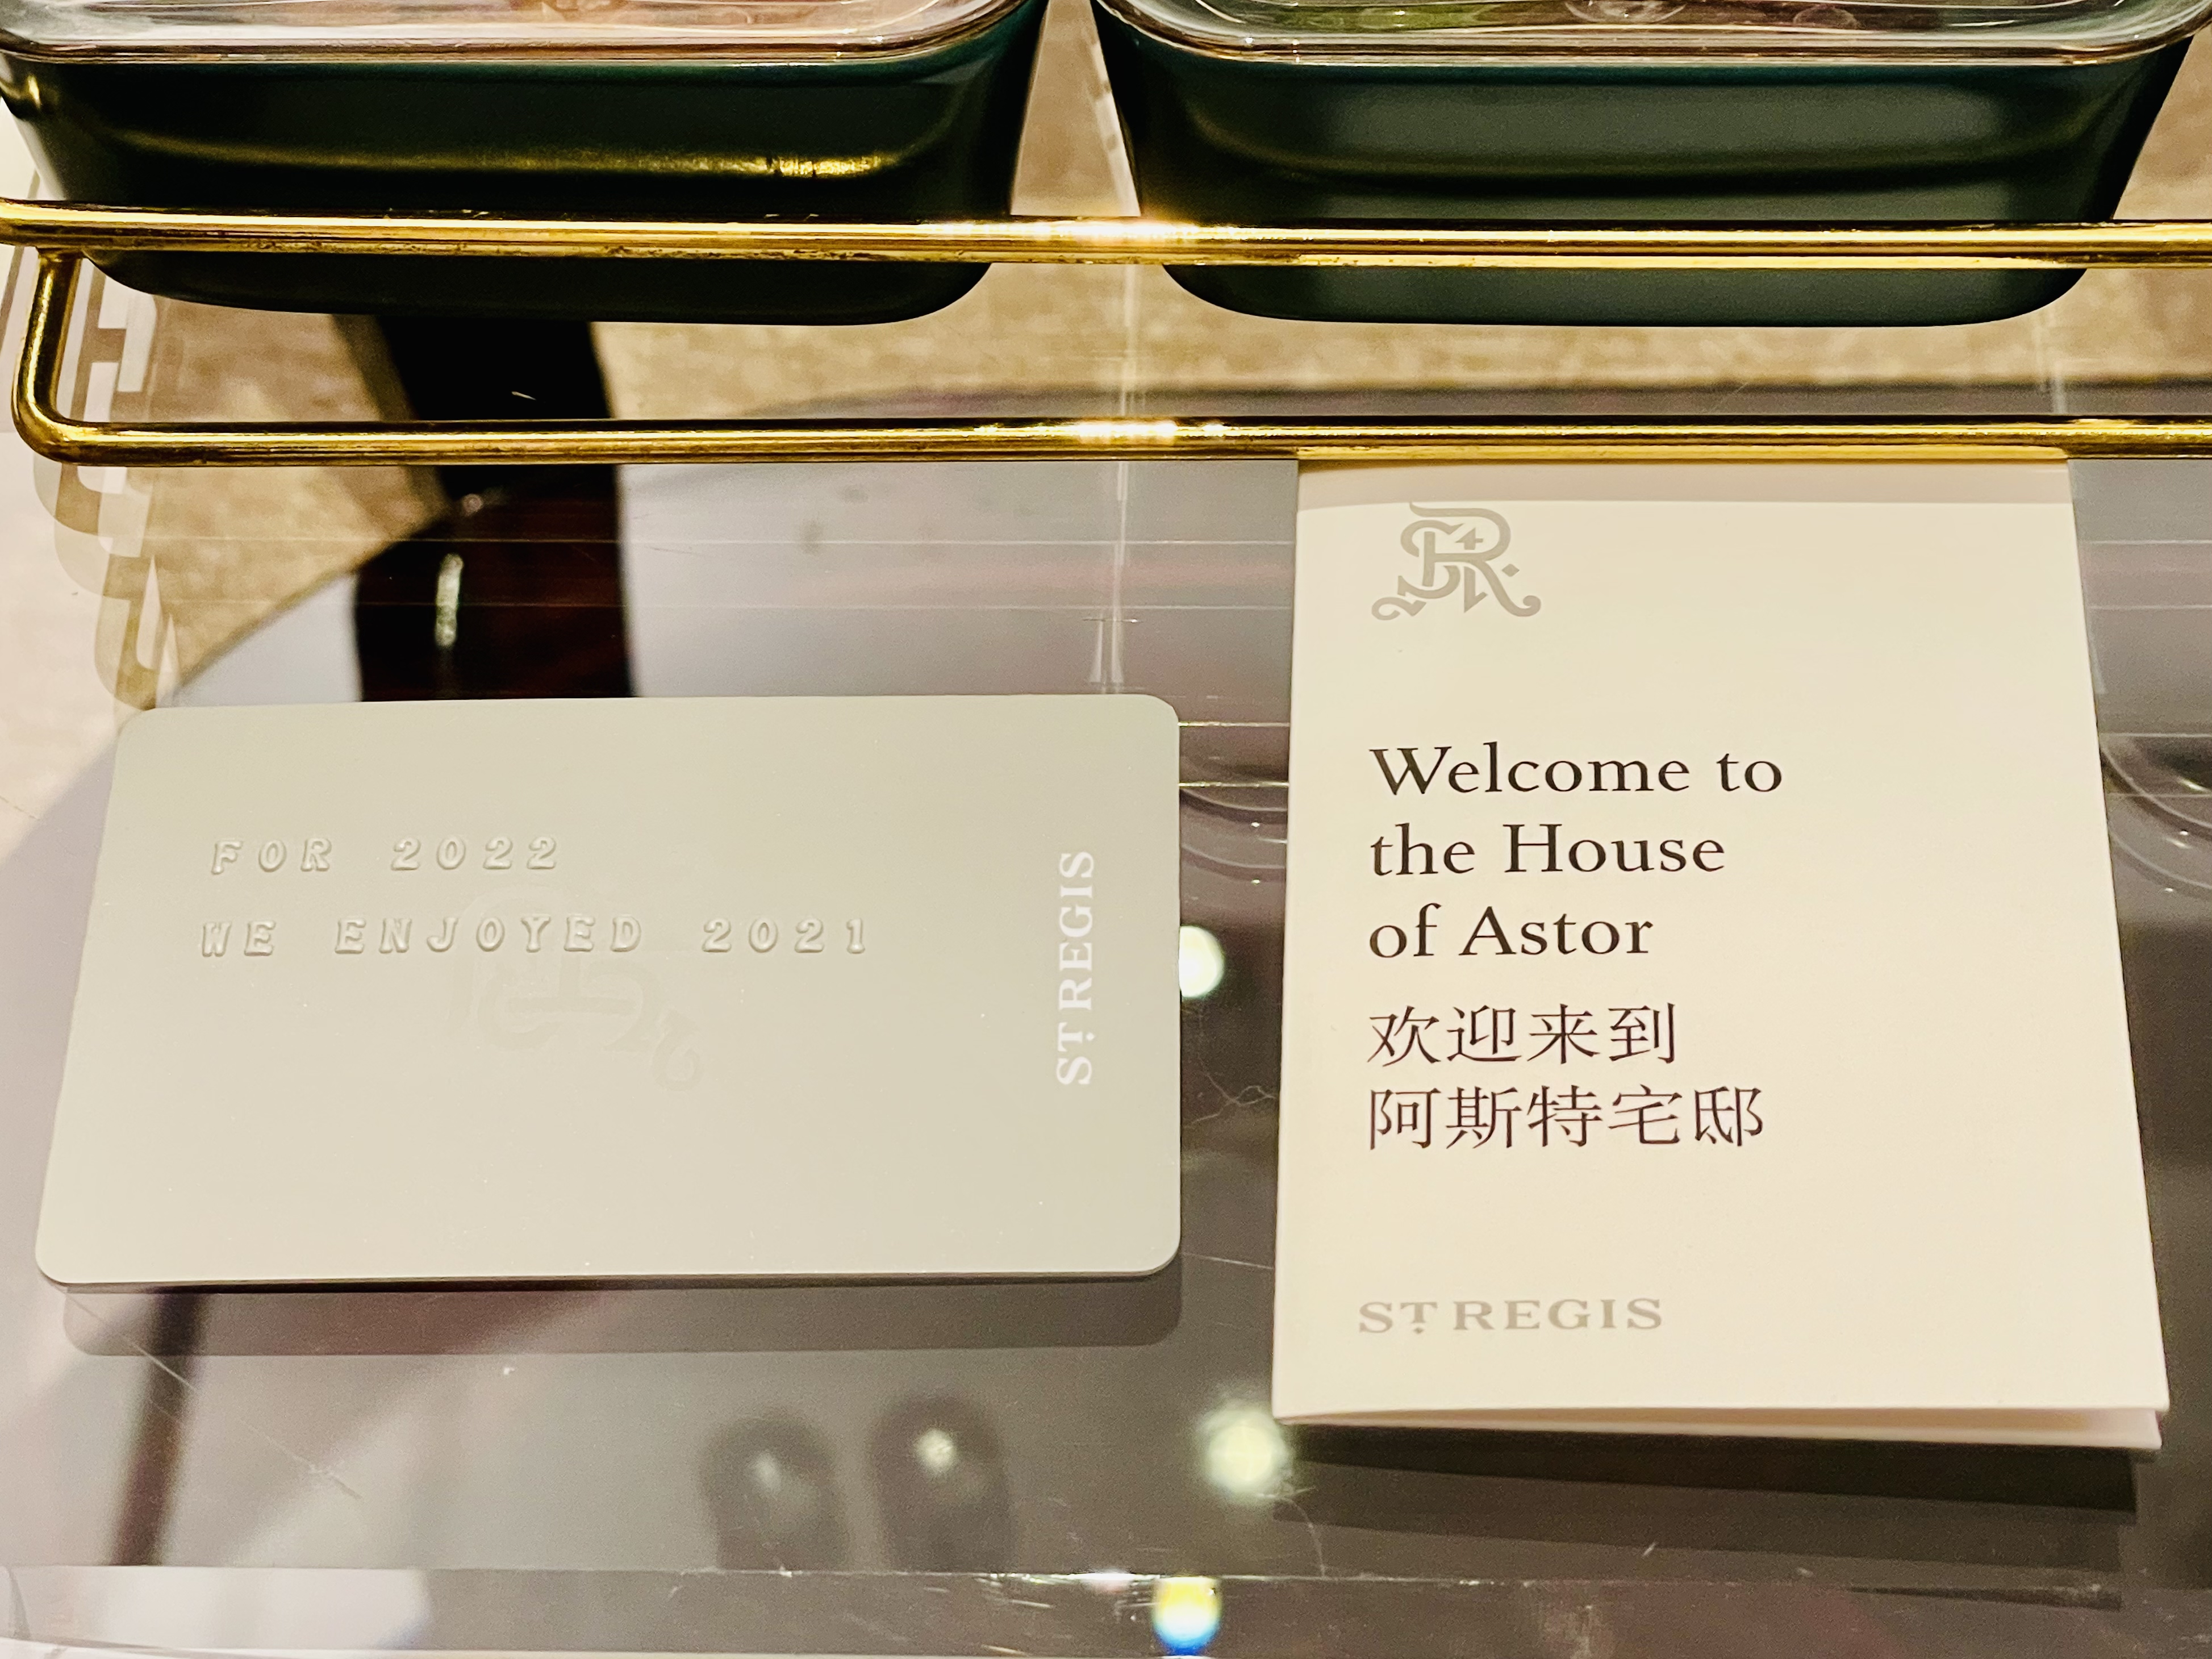 FOR 2022，WE ENJOYED 2021!｜St.Regis Changsha 星城阿斯特宅邸——长沙瑞吉酒店